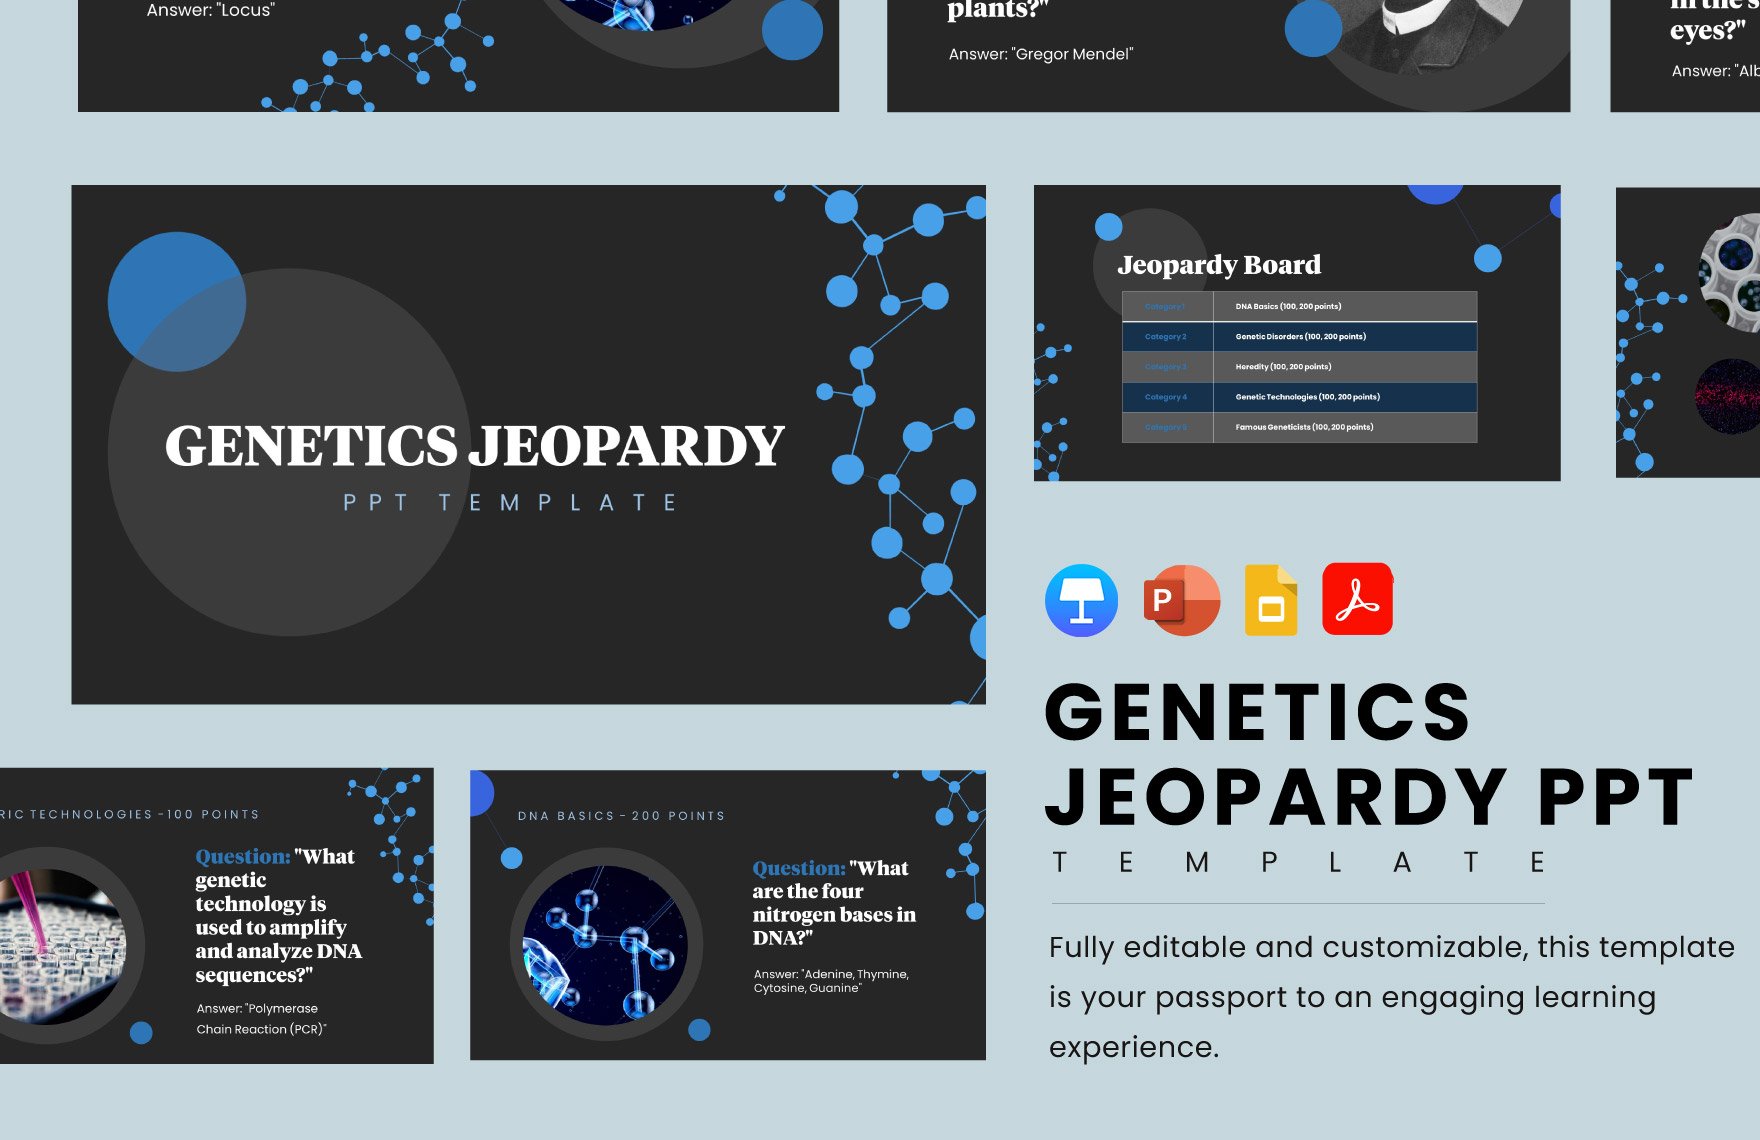 Genetics Jeopardy PPT Template